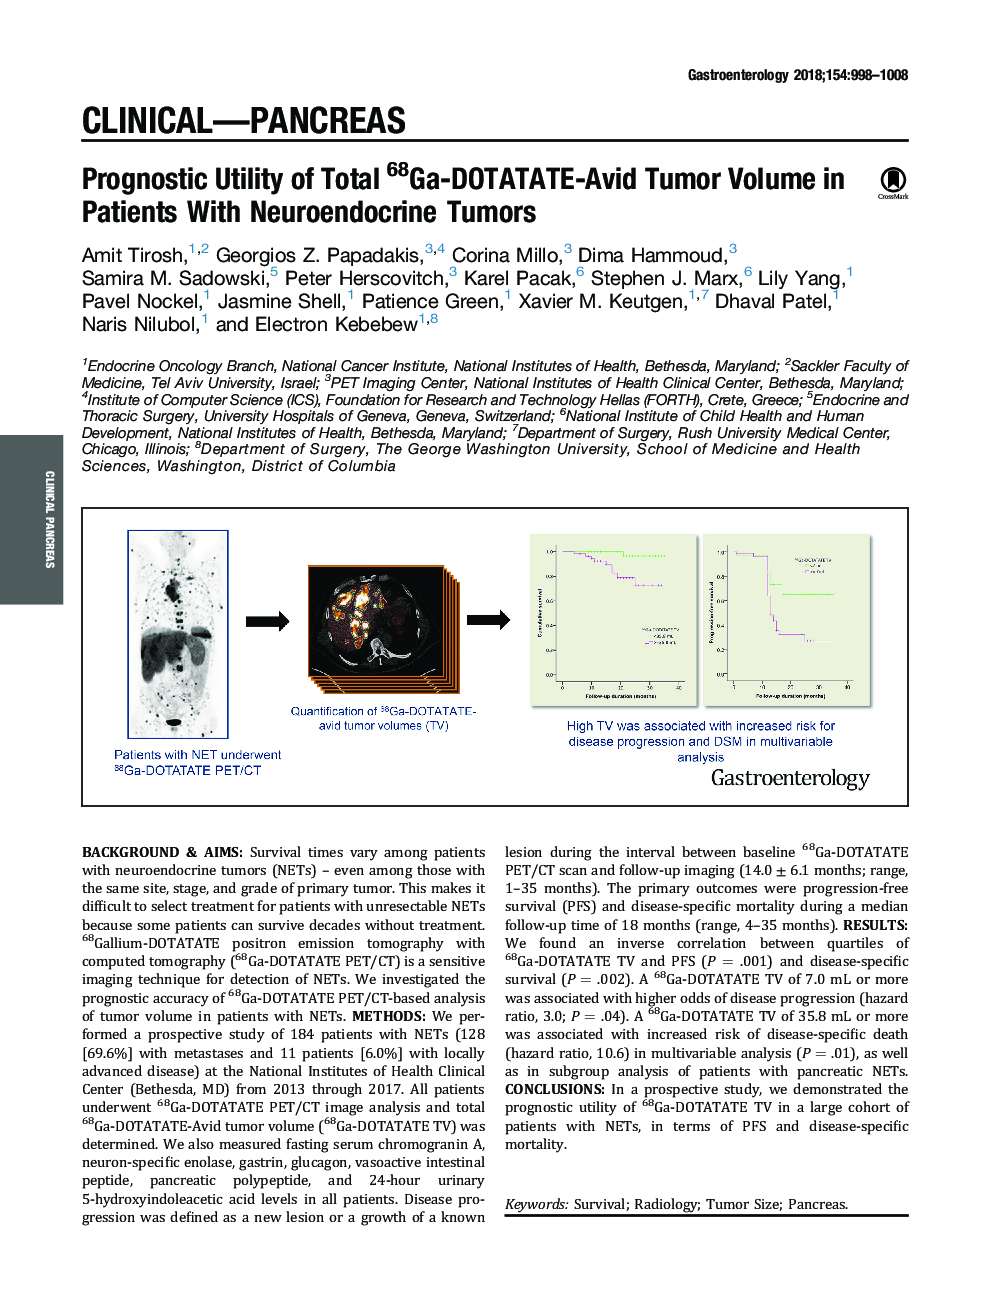 Prognostic Utility of Total 68Ga-DOTATATE-Avid Tumor Volume in Patients With Neuroendocrine Tumors